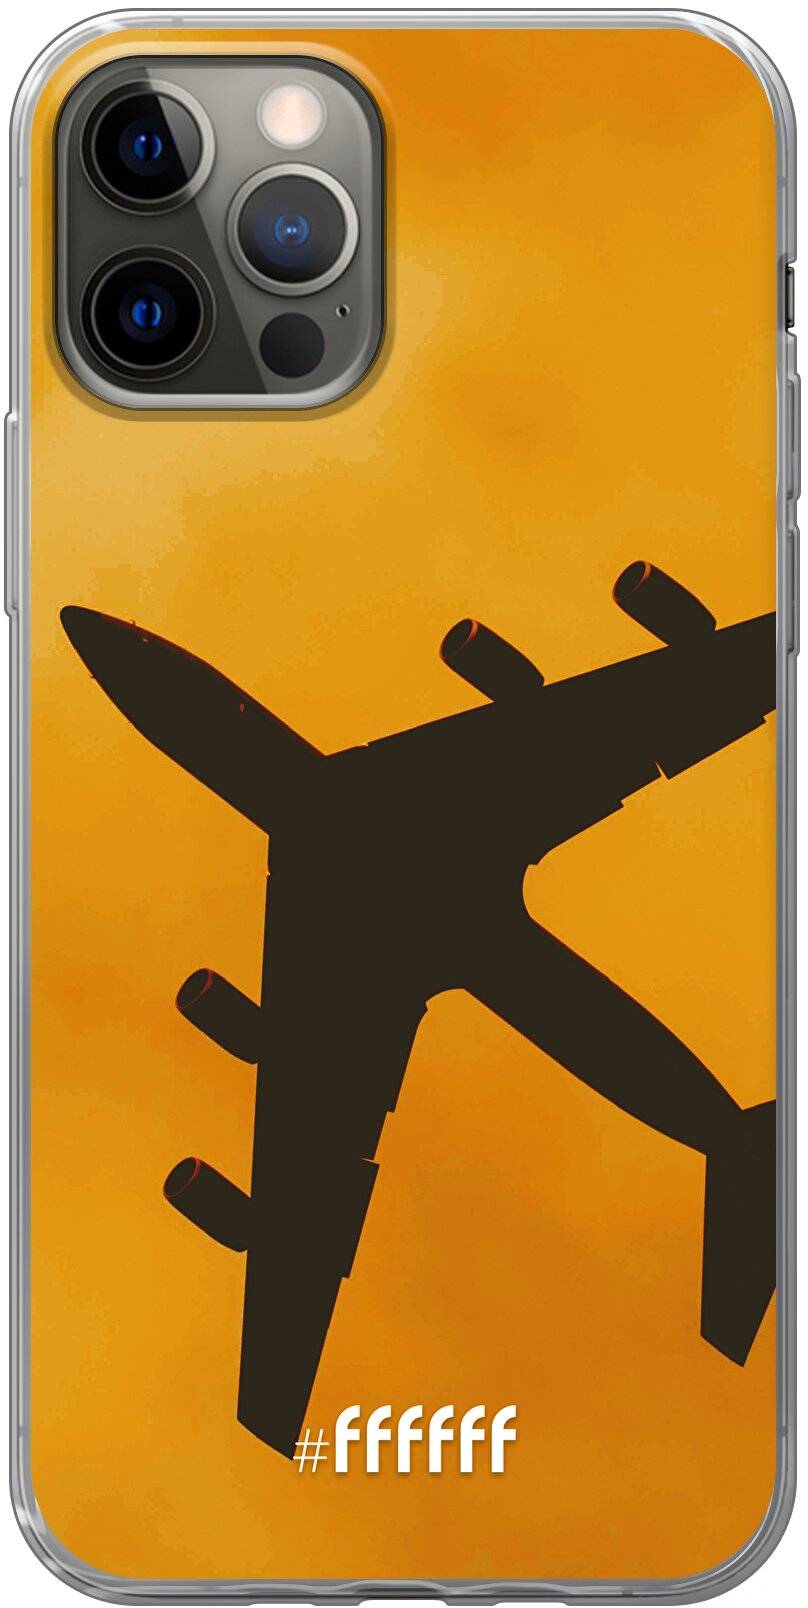 Aeroplane iPhone 12 Pro